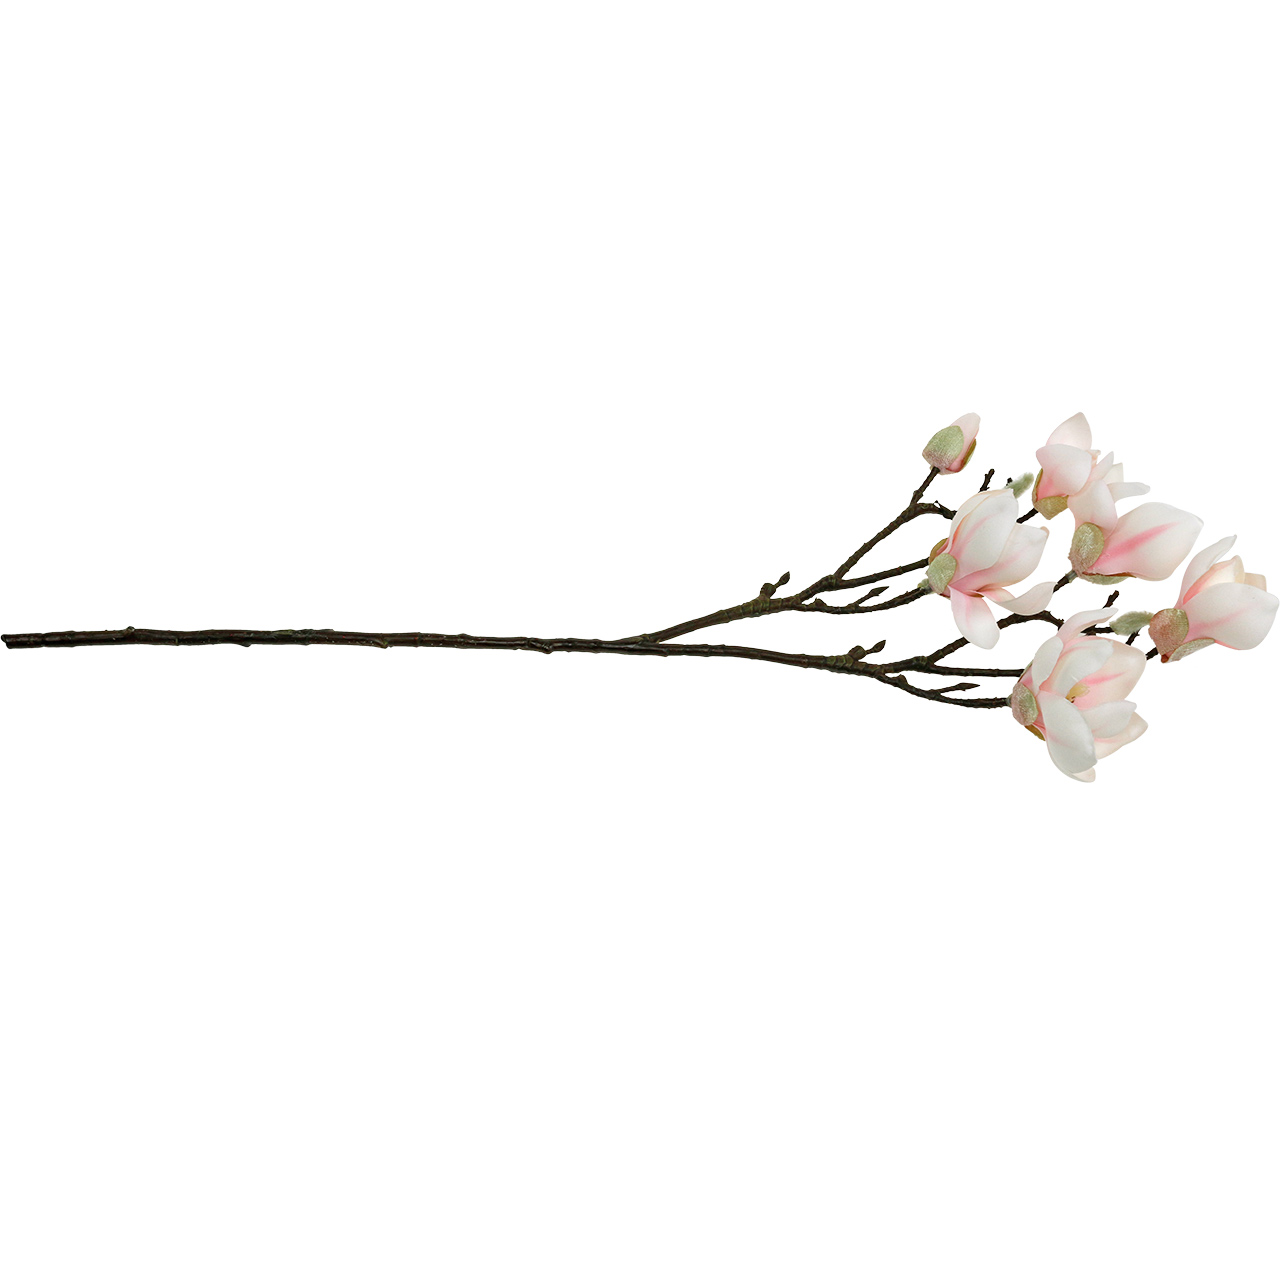 Magnolie Magnolienzweig Kunstblume Seidenblume pink rose L 43 cm 181821 F62 